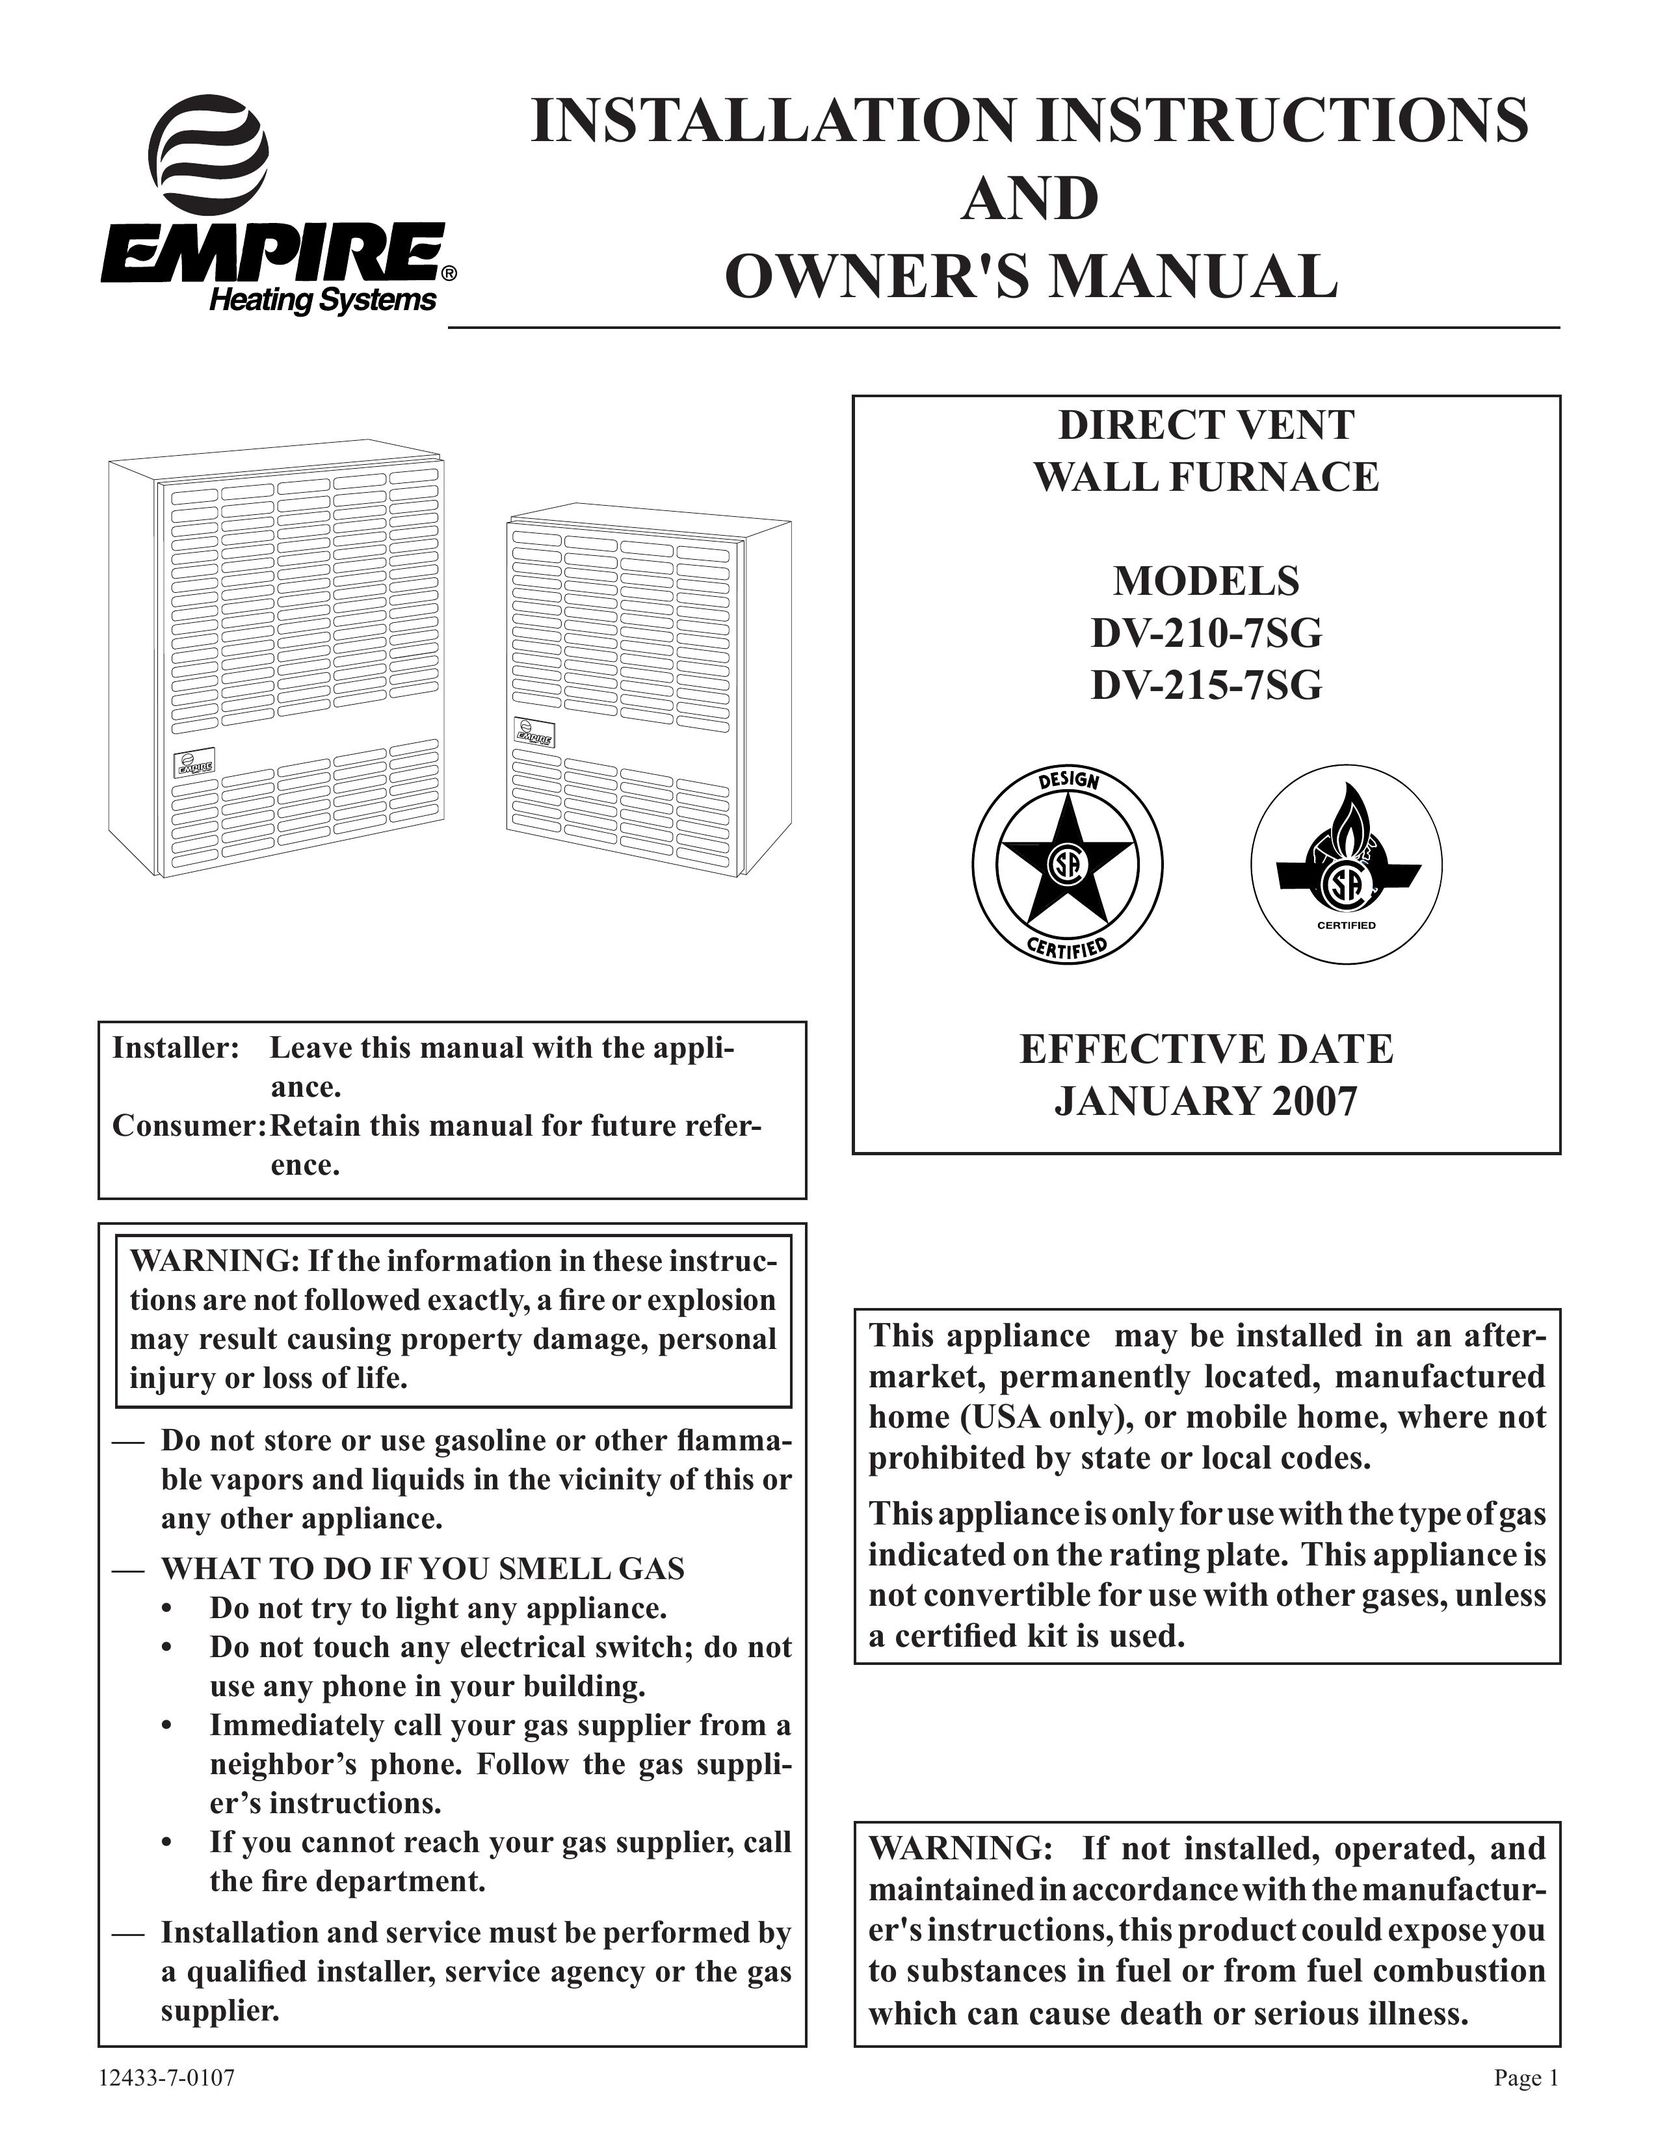 Empire Comfort Systems DV-210-7SG Furnace User Manual